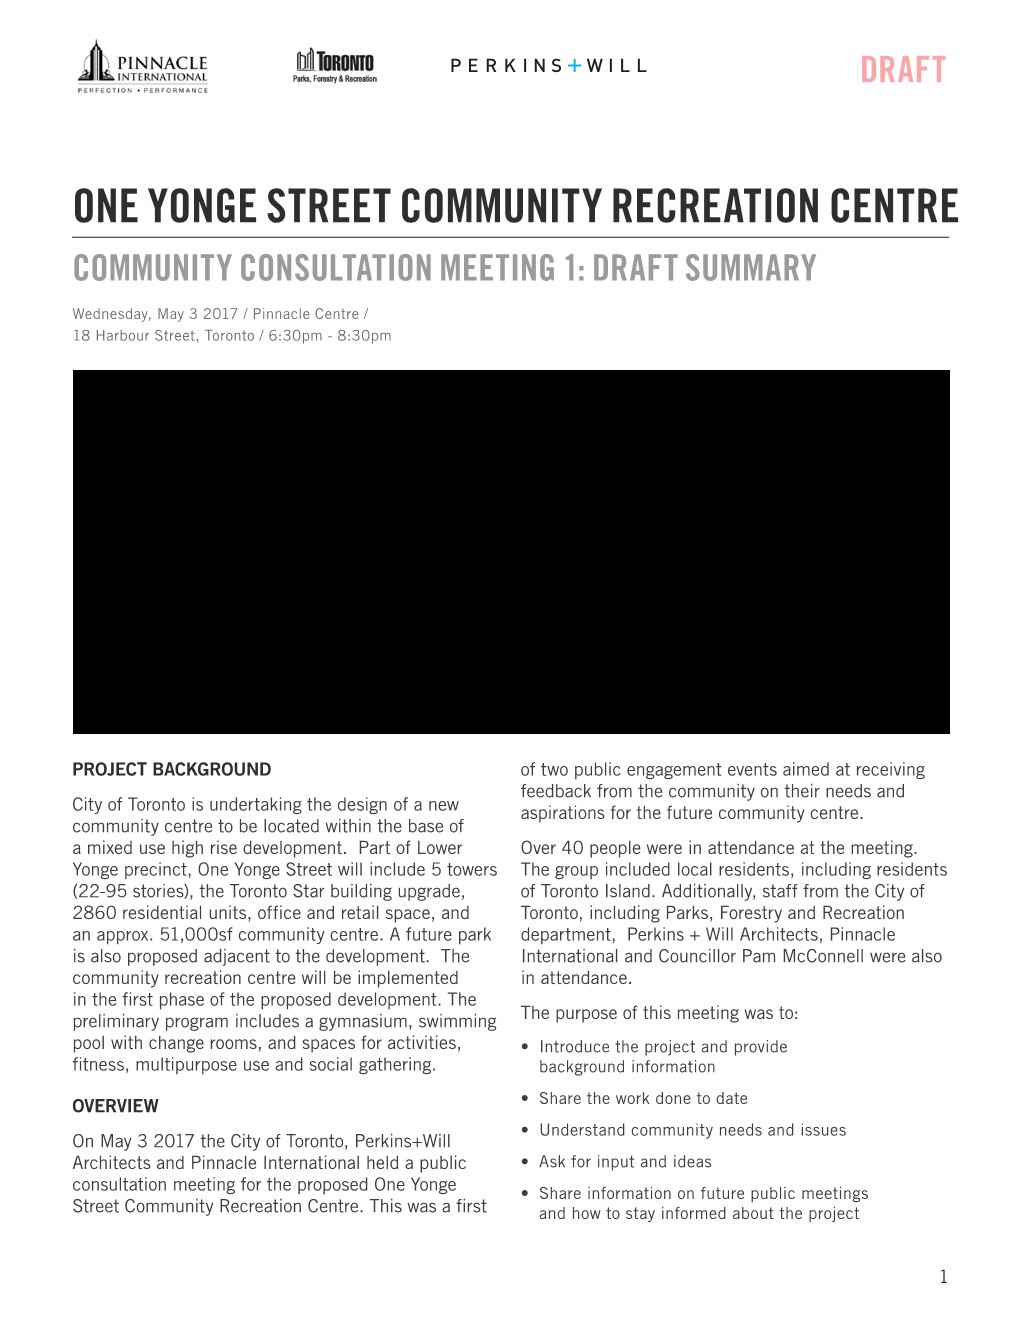 One Yonge Street Community Recreation Centre Community Consultation Meeting 1: Draft Summary